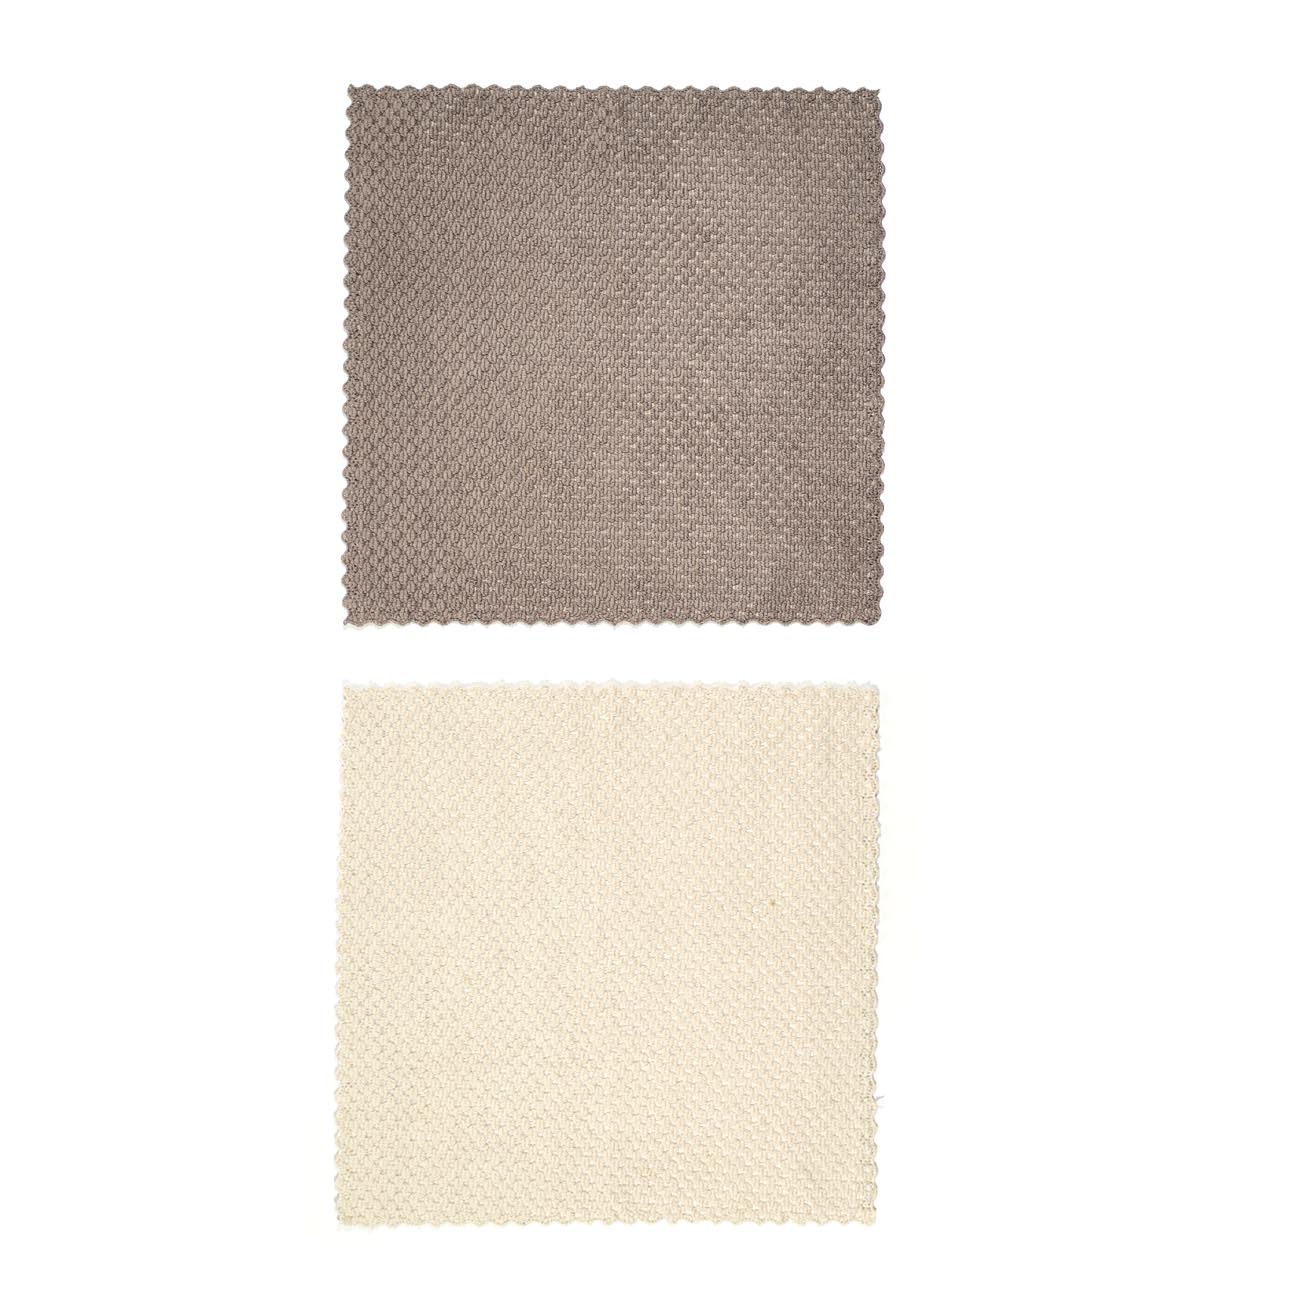 Kitchen cloth, 30x30 cm, 2 pcs, microfiber, brown / cream, Grain, Clean изображение № 2